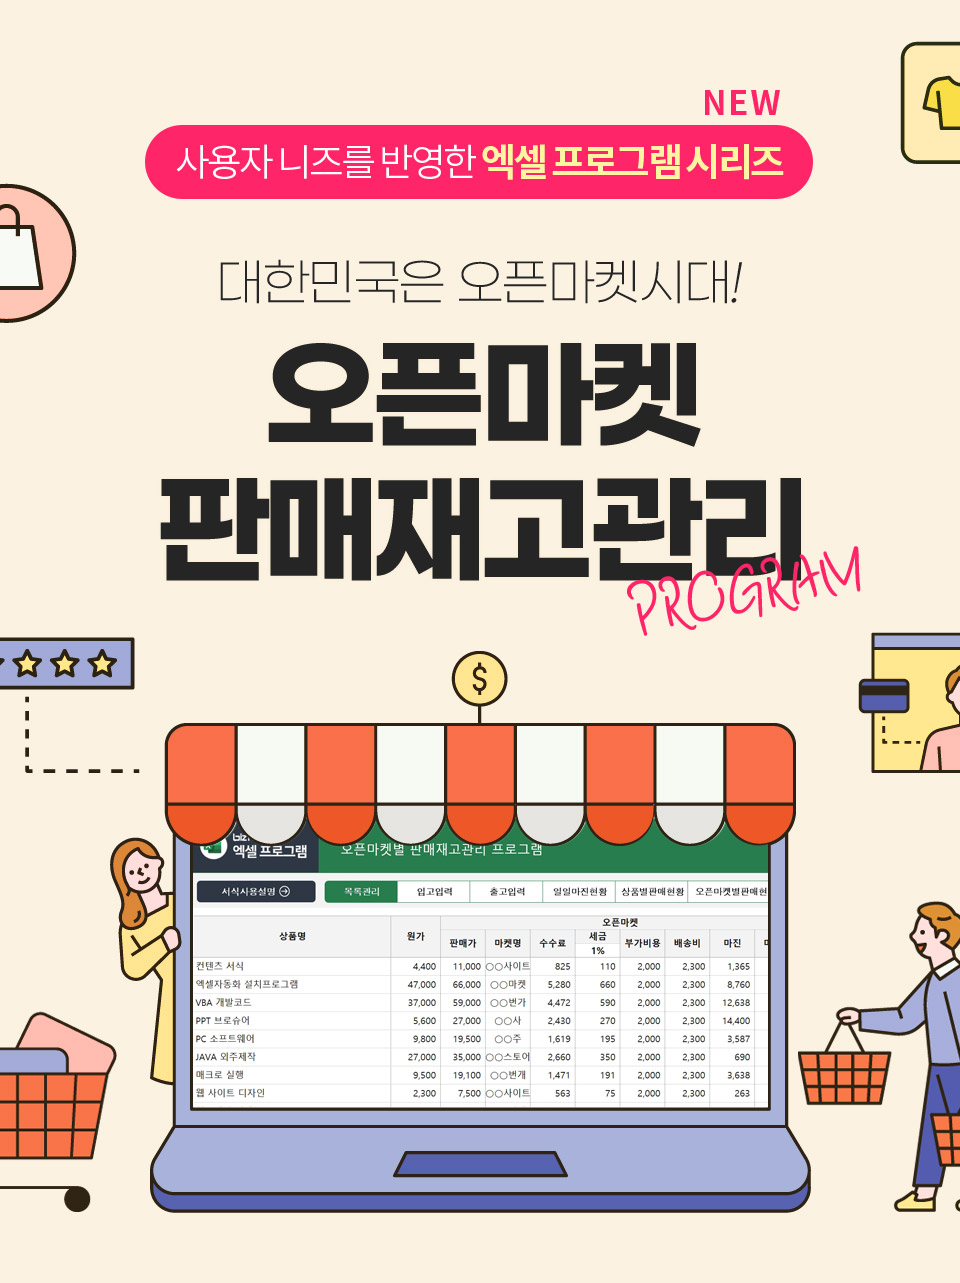 (NEW 사용자 니즈를 반영한 엑셀 프로그램 시리즈) 대한민국은 오픈마켓시대! 오픈마켓 판매재고관리 PROGRAM